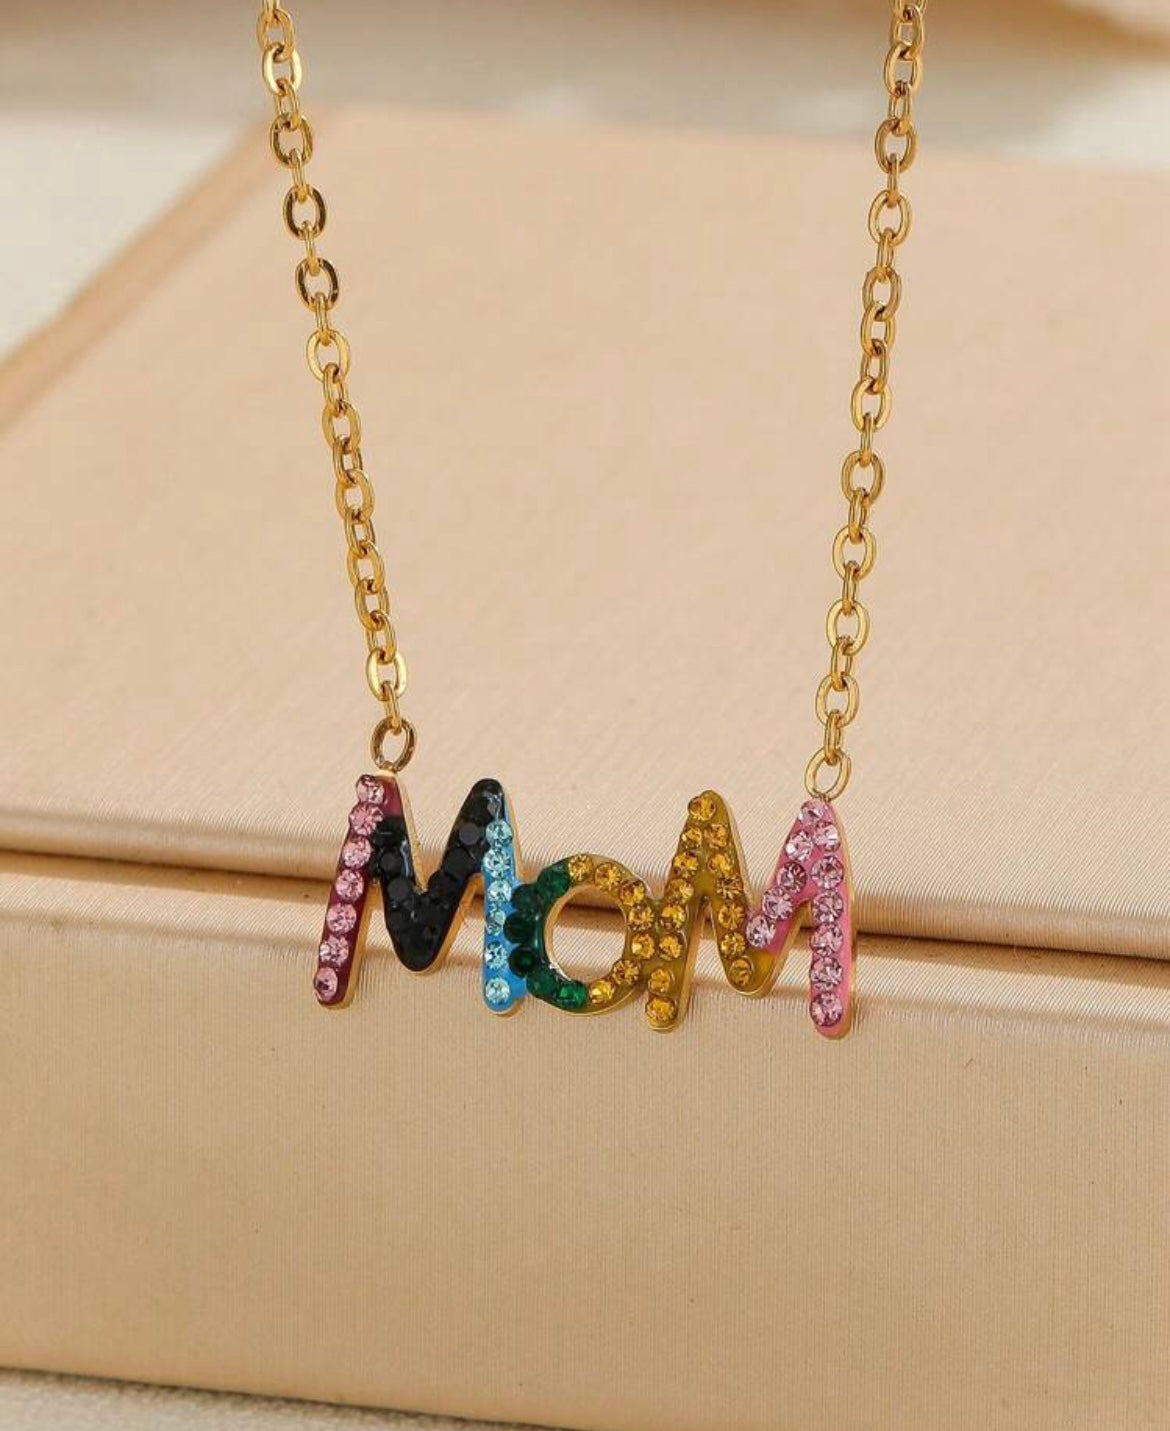 Color Me Mom necklace